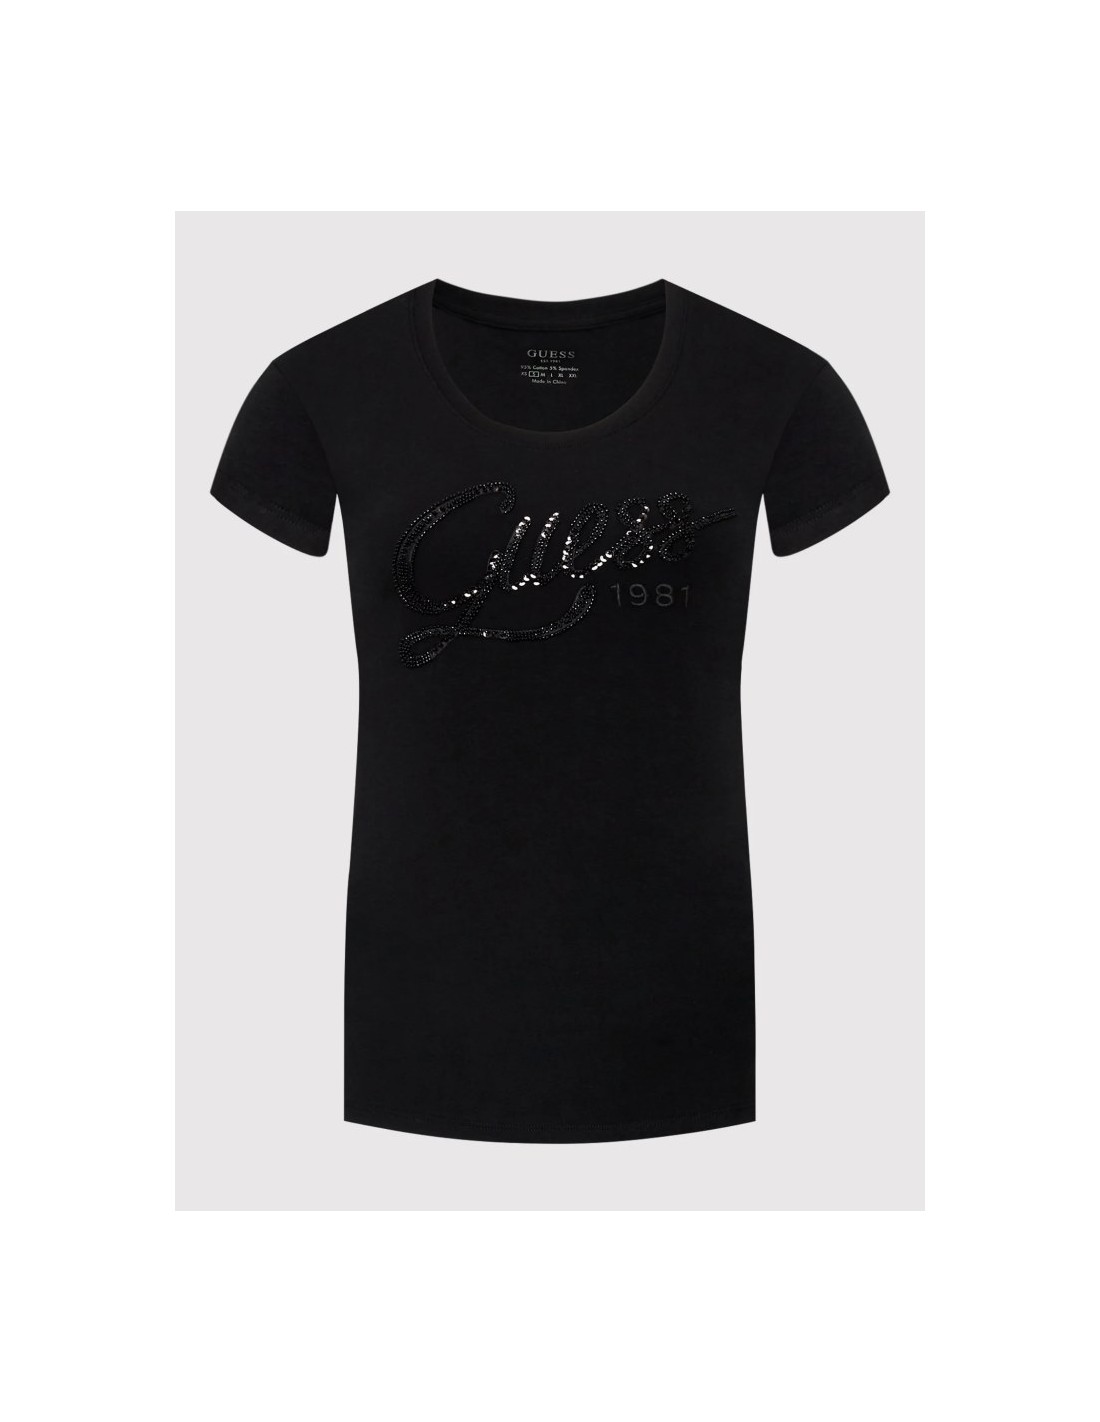 Camiseta Guess 1981 negra para mujer